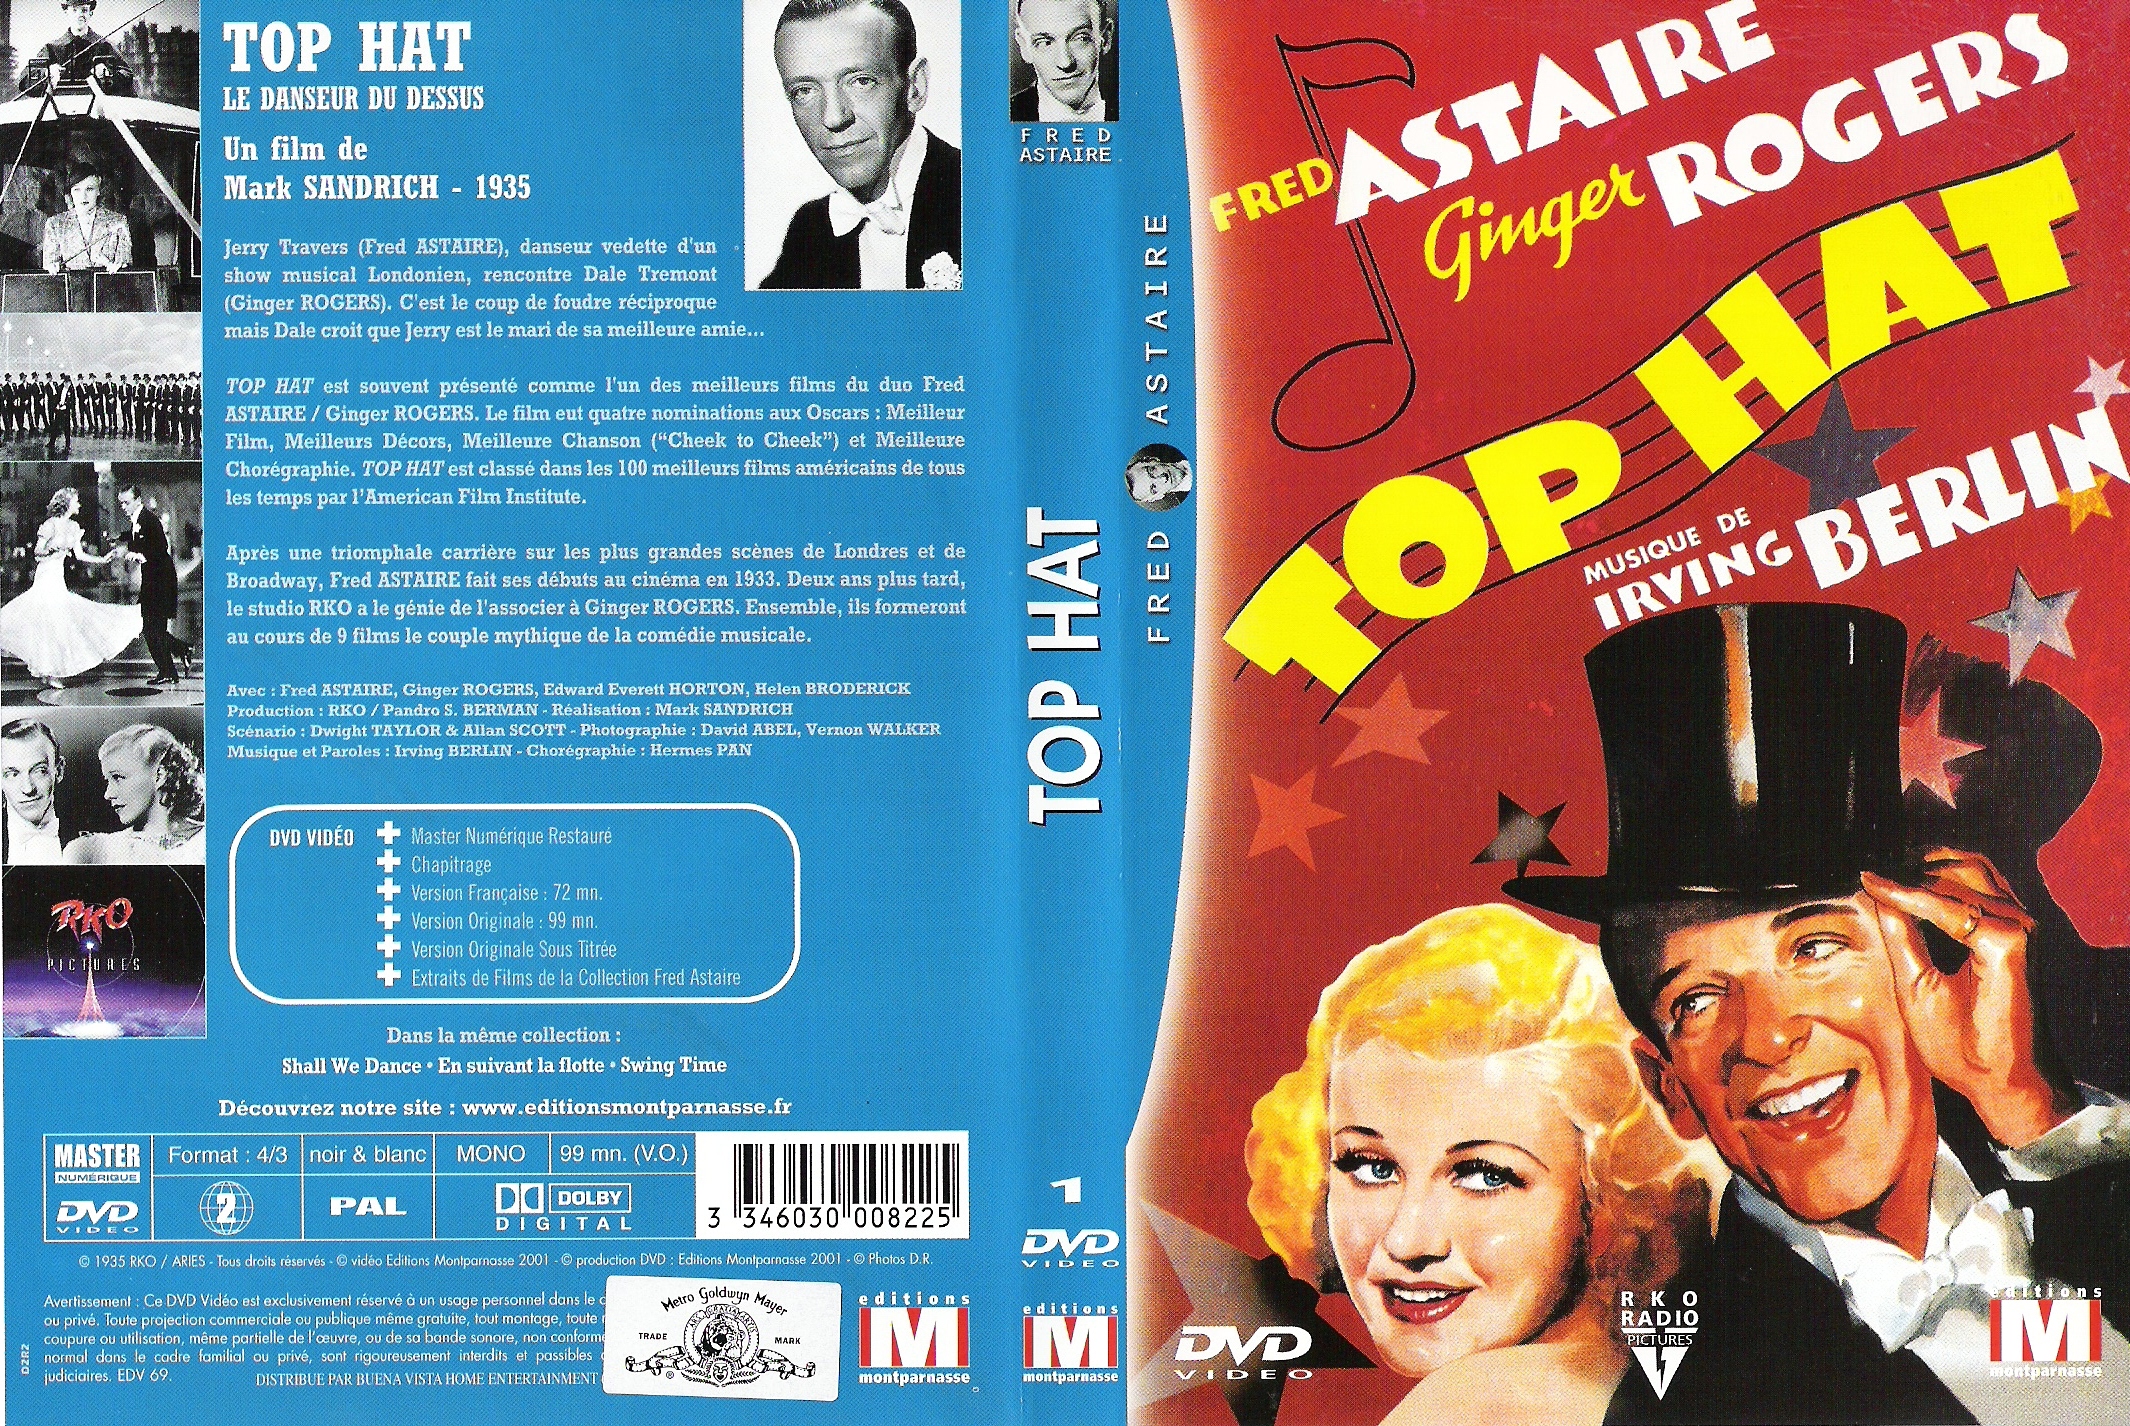 Jaquette DVD Top hat